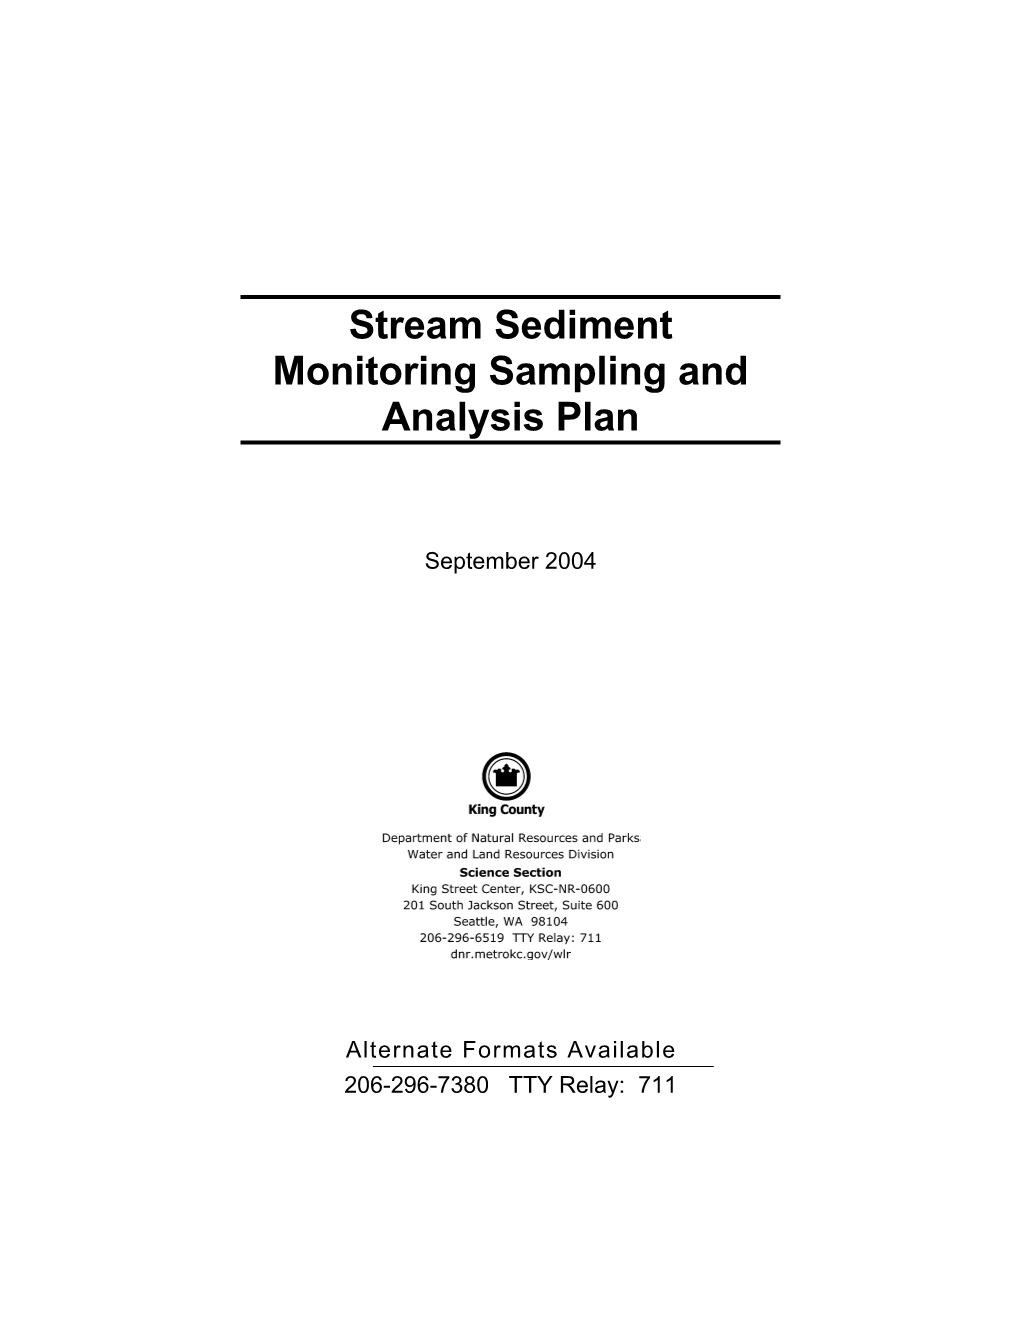 Streams Sediment SAP